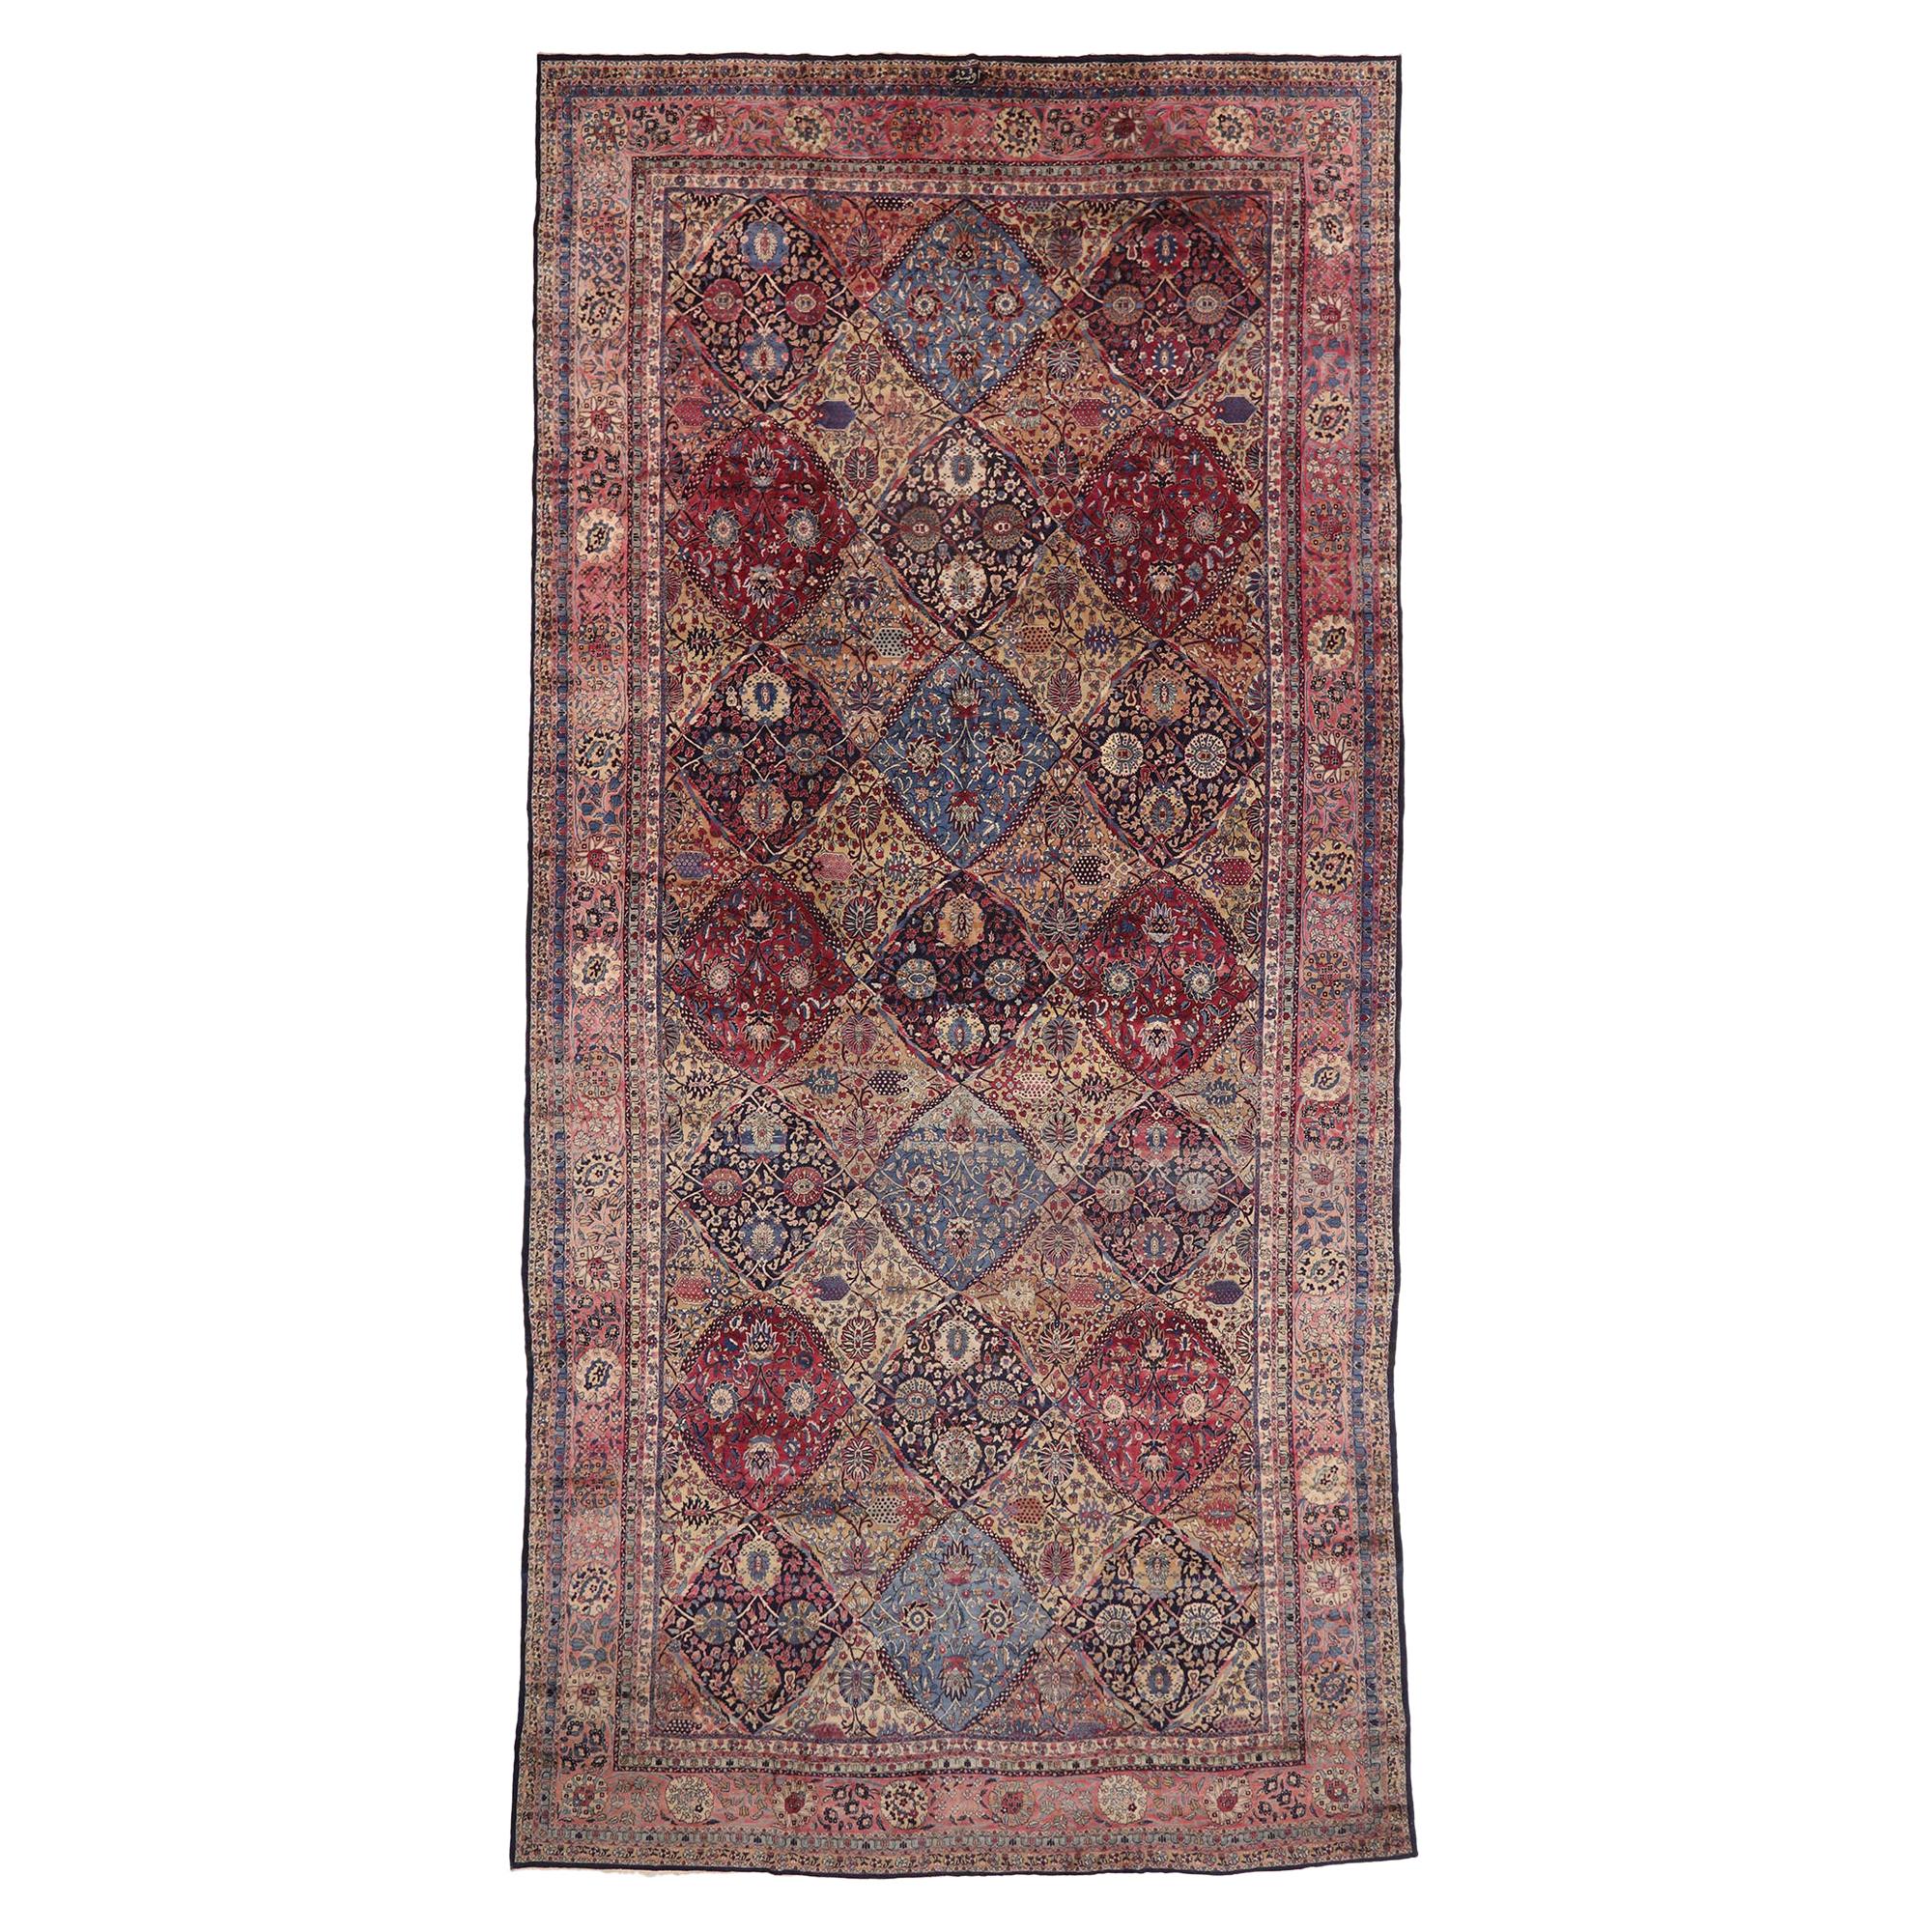 Oversized Antique Persian Kerman Rug, Hotel Lobby Size Carpet